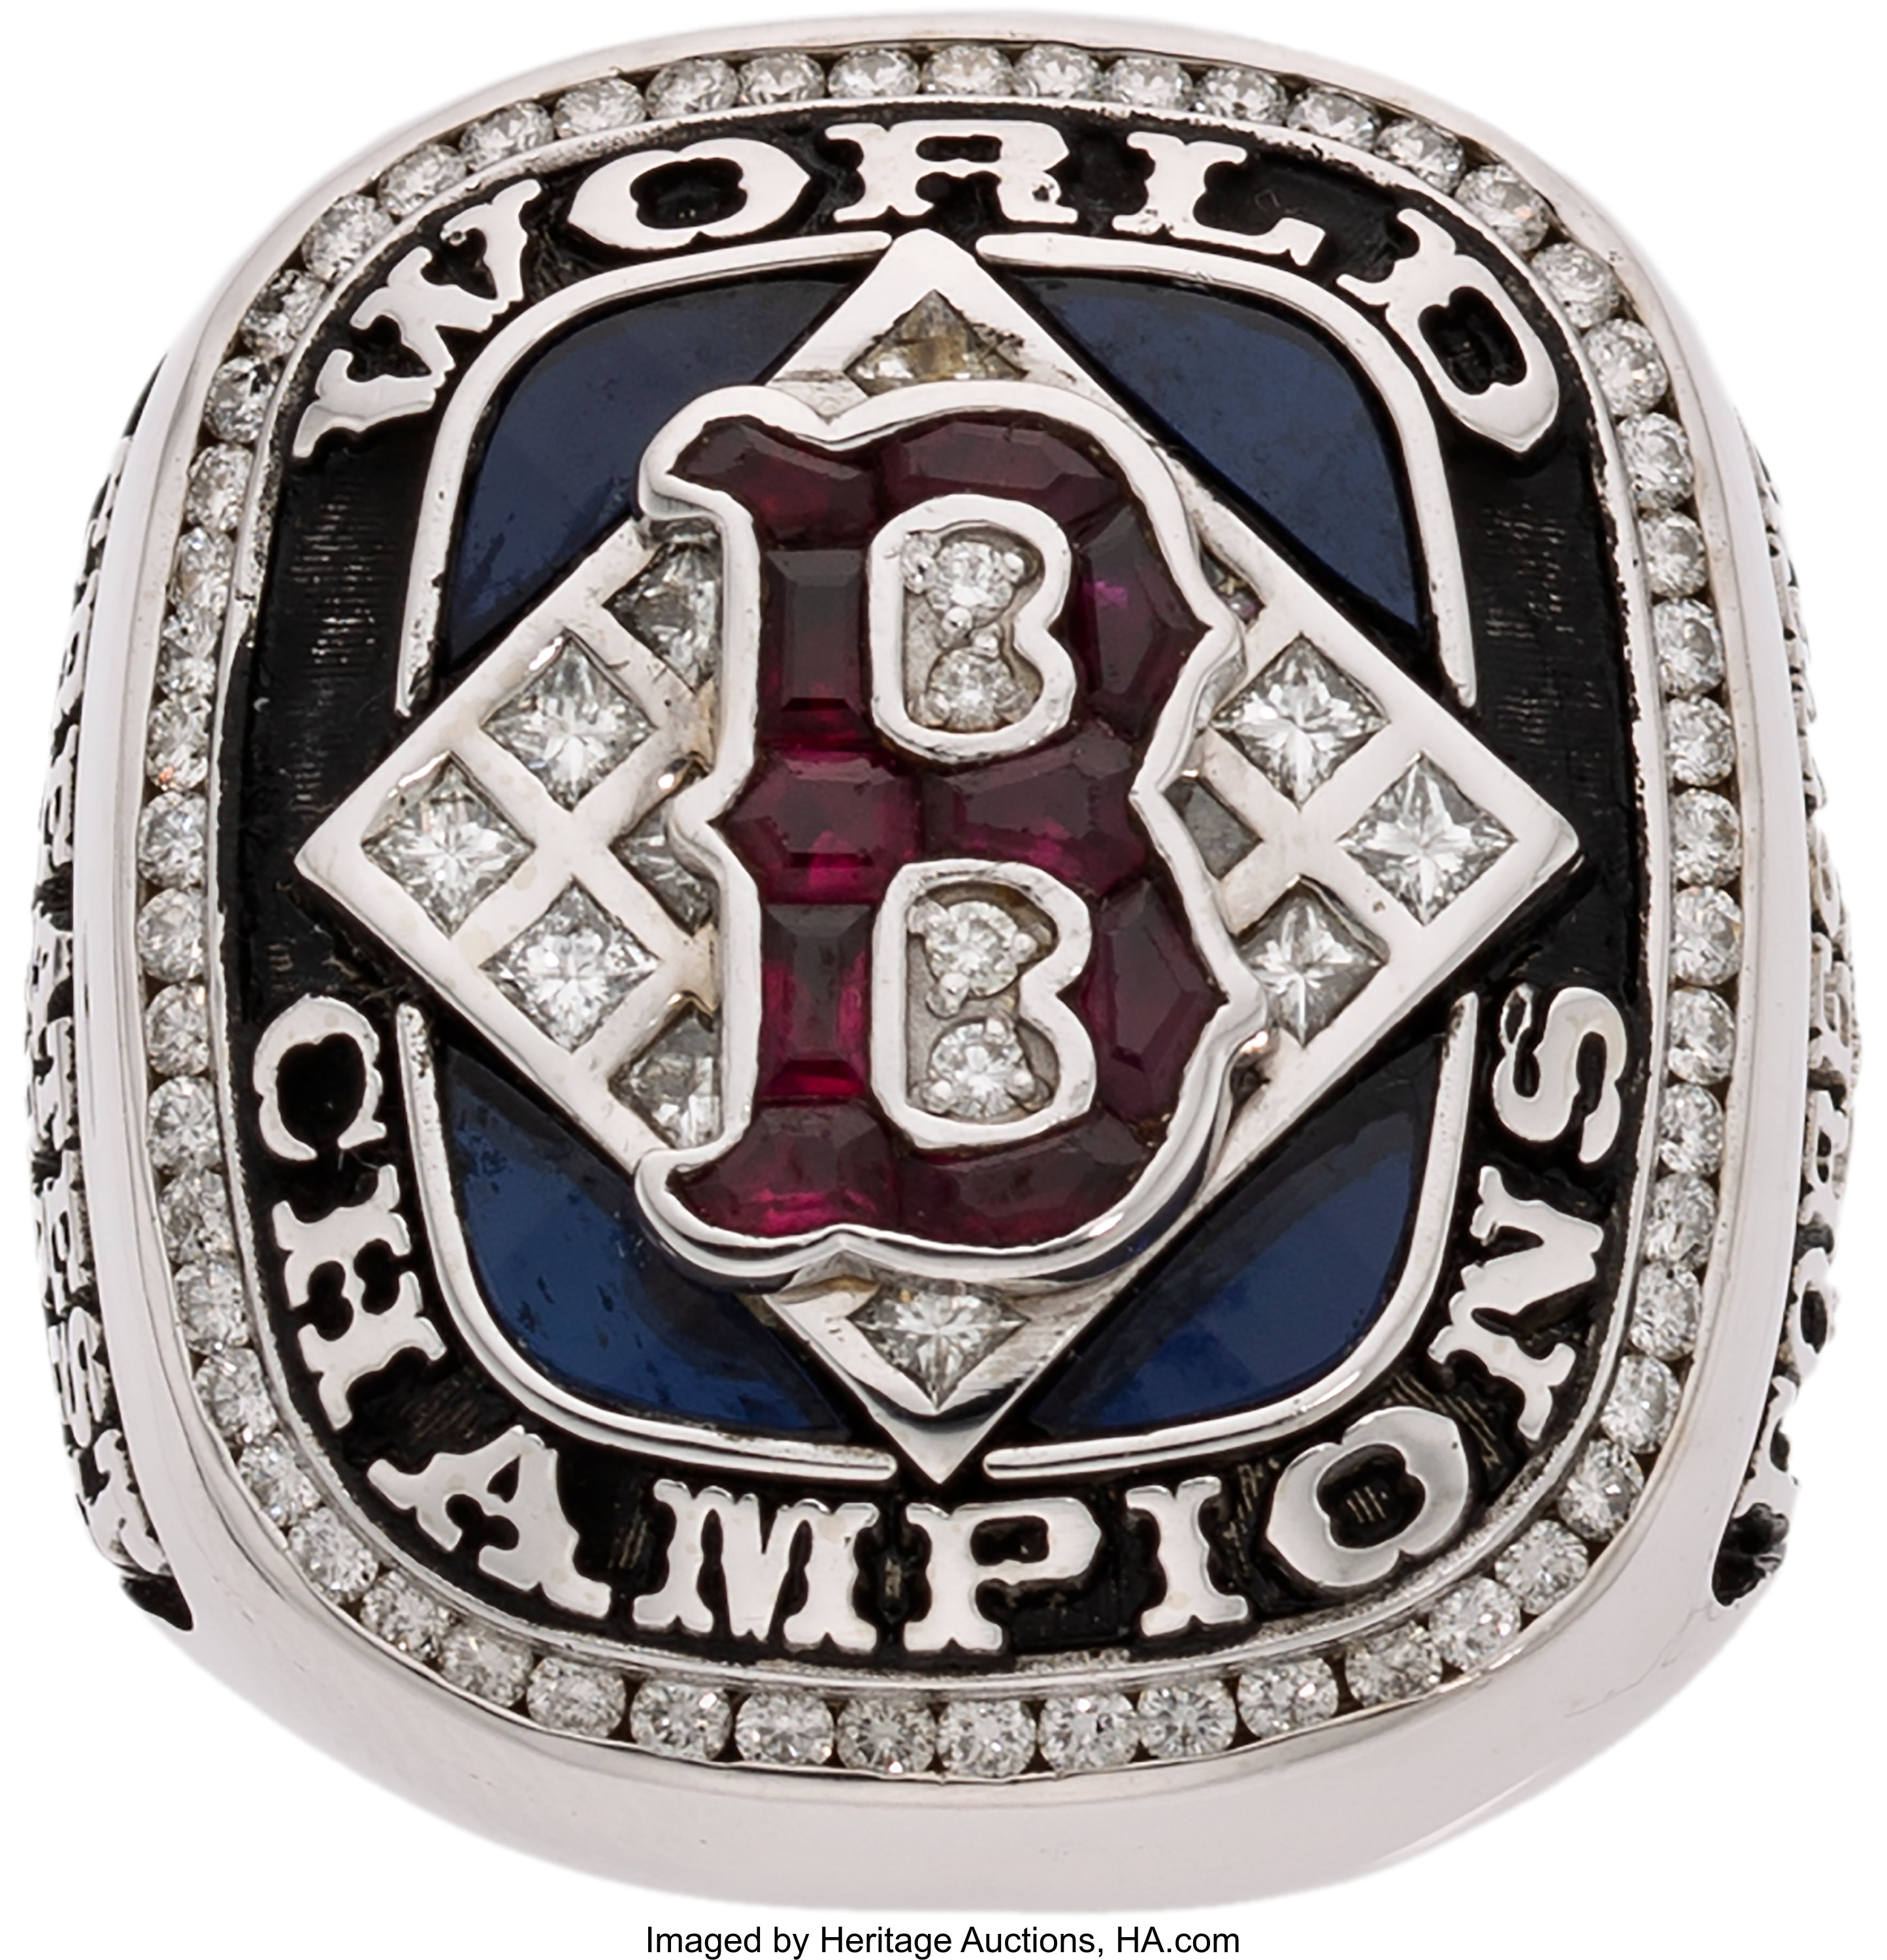 Boston Red Sox unveil championship ring